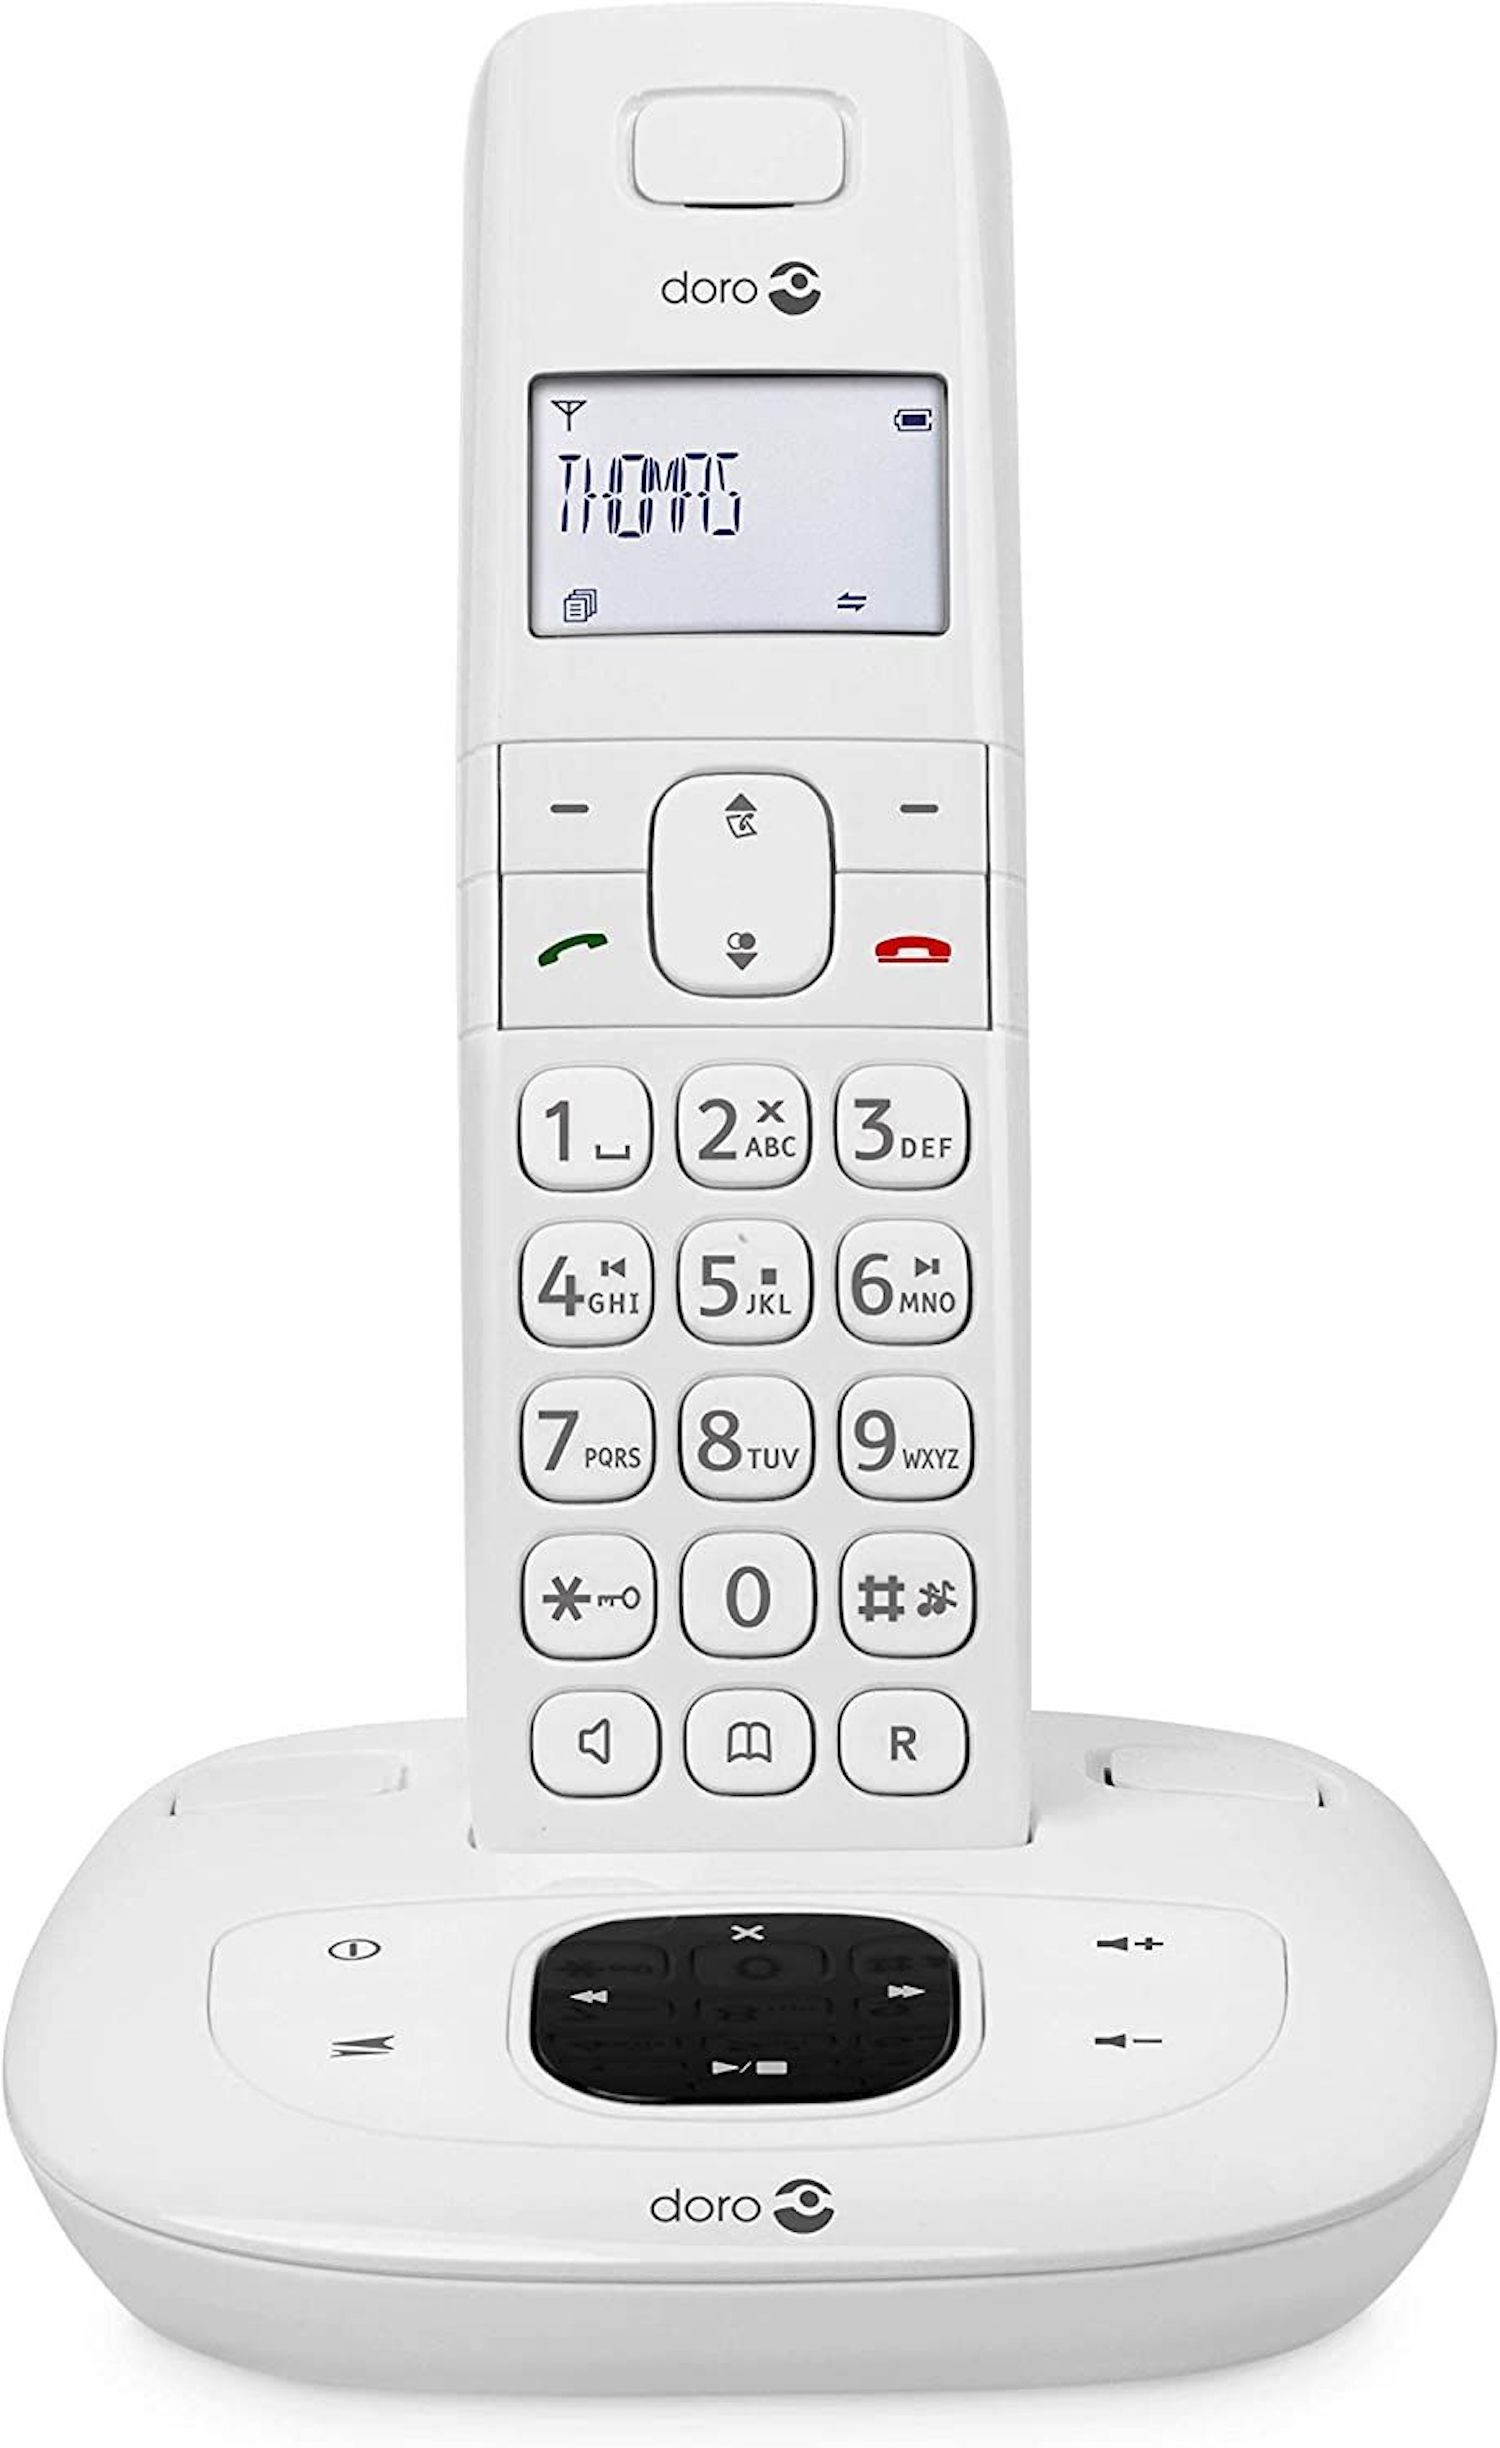 DORO 1015 Telefon Comfort Schnurloses